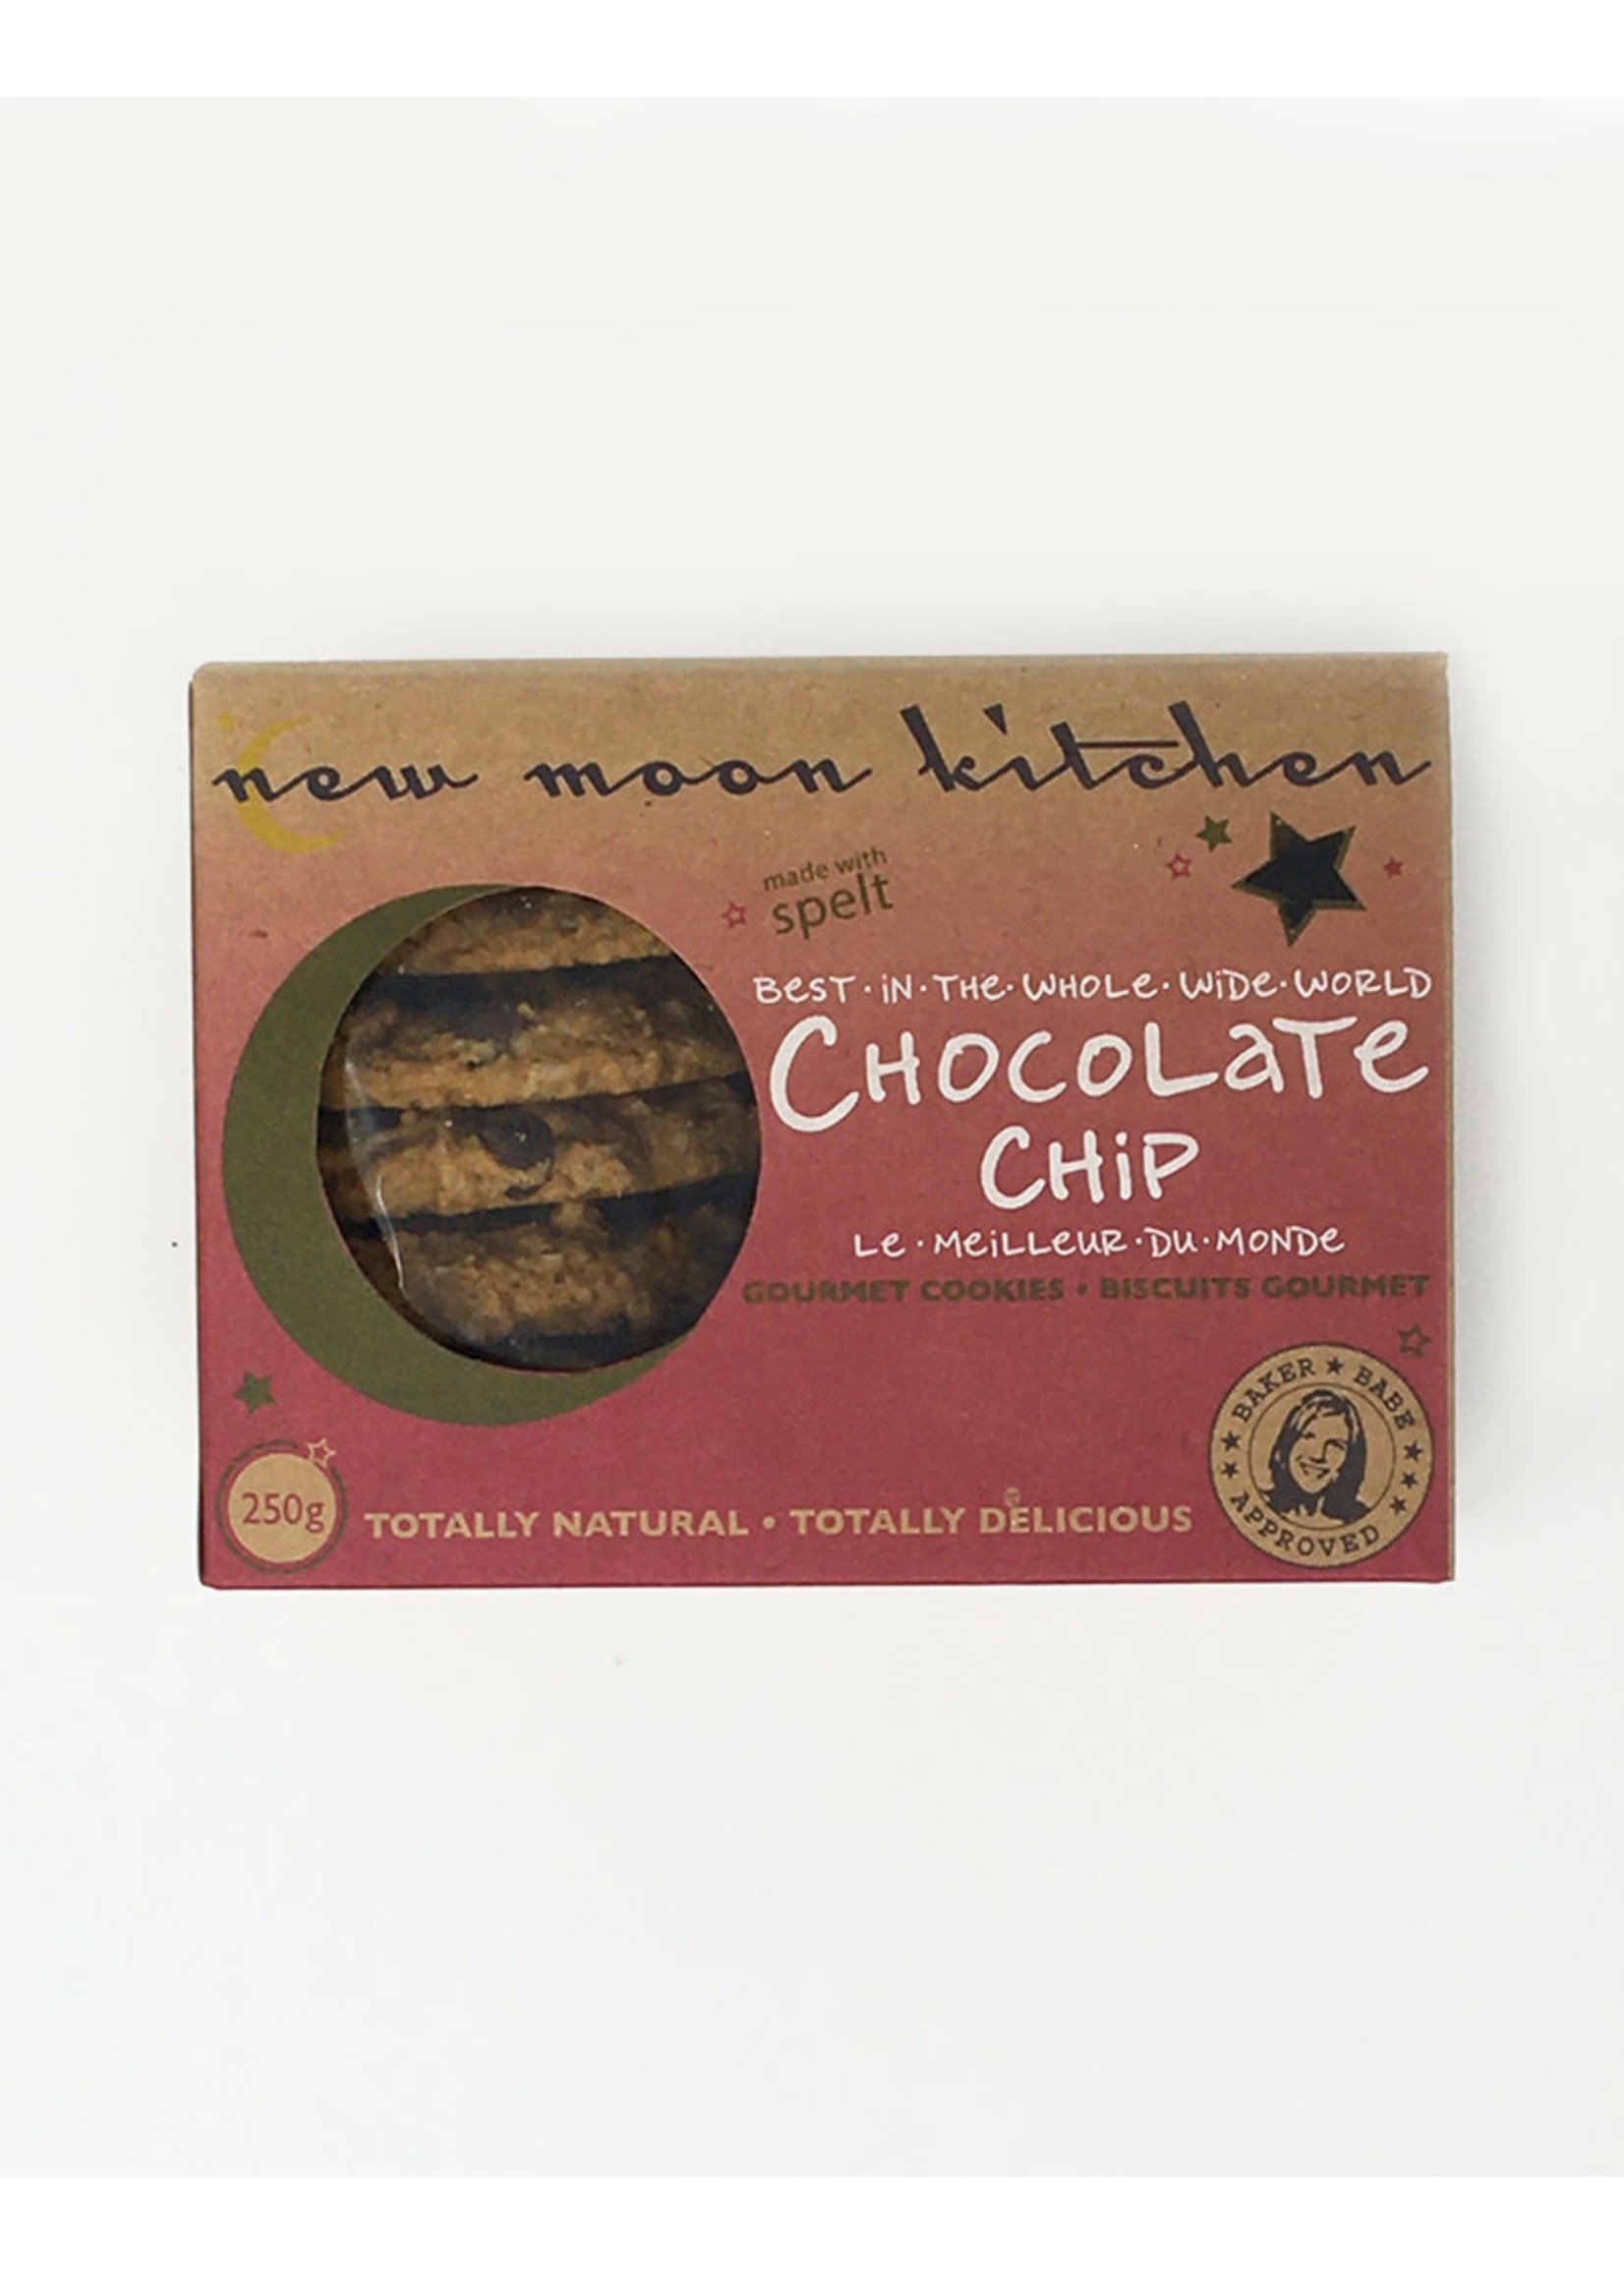 New Moon Kitchen New Moon Kitchen - Cookies, Chocolate Chip (box)